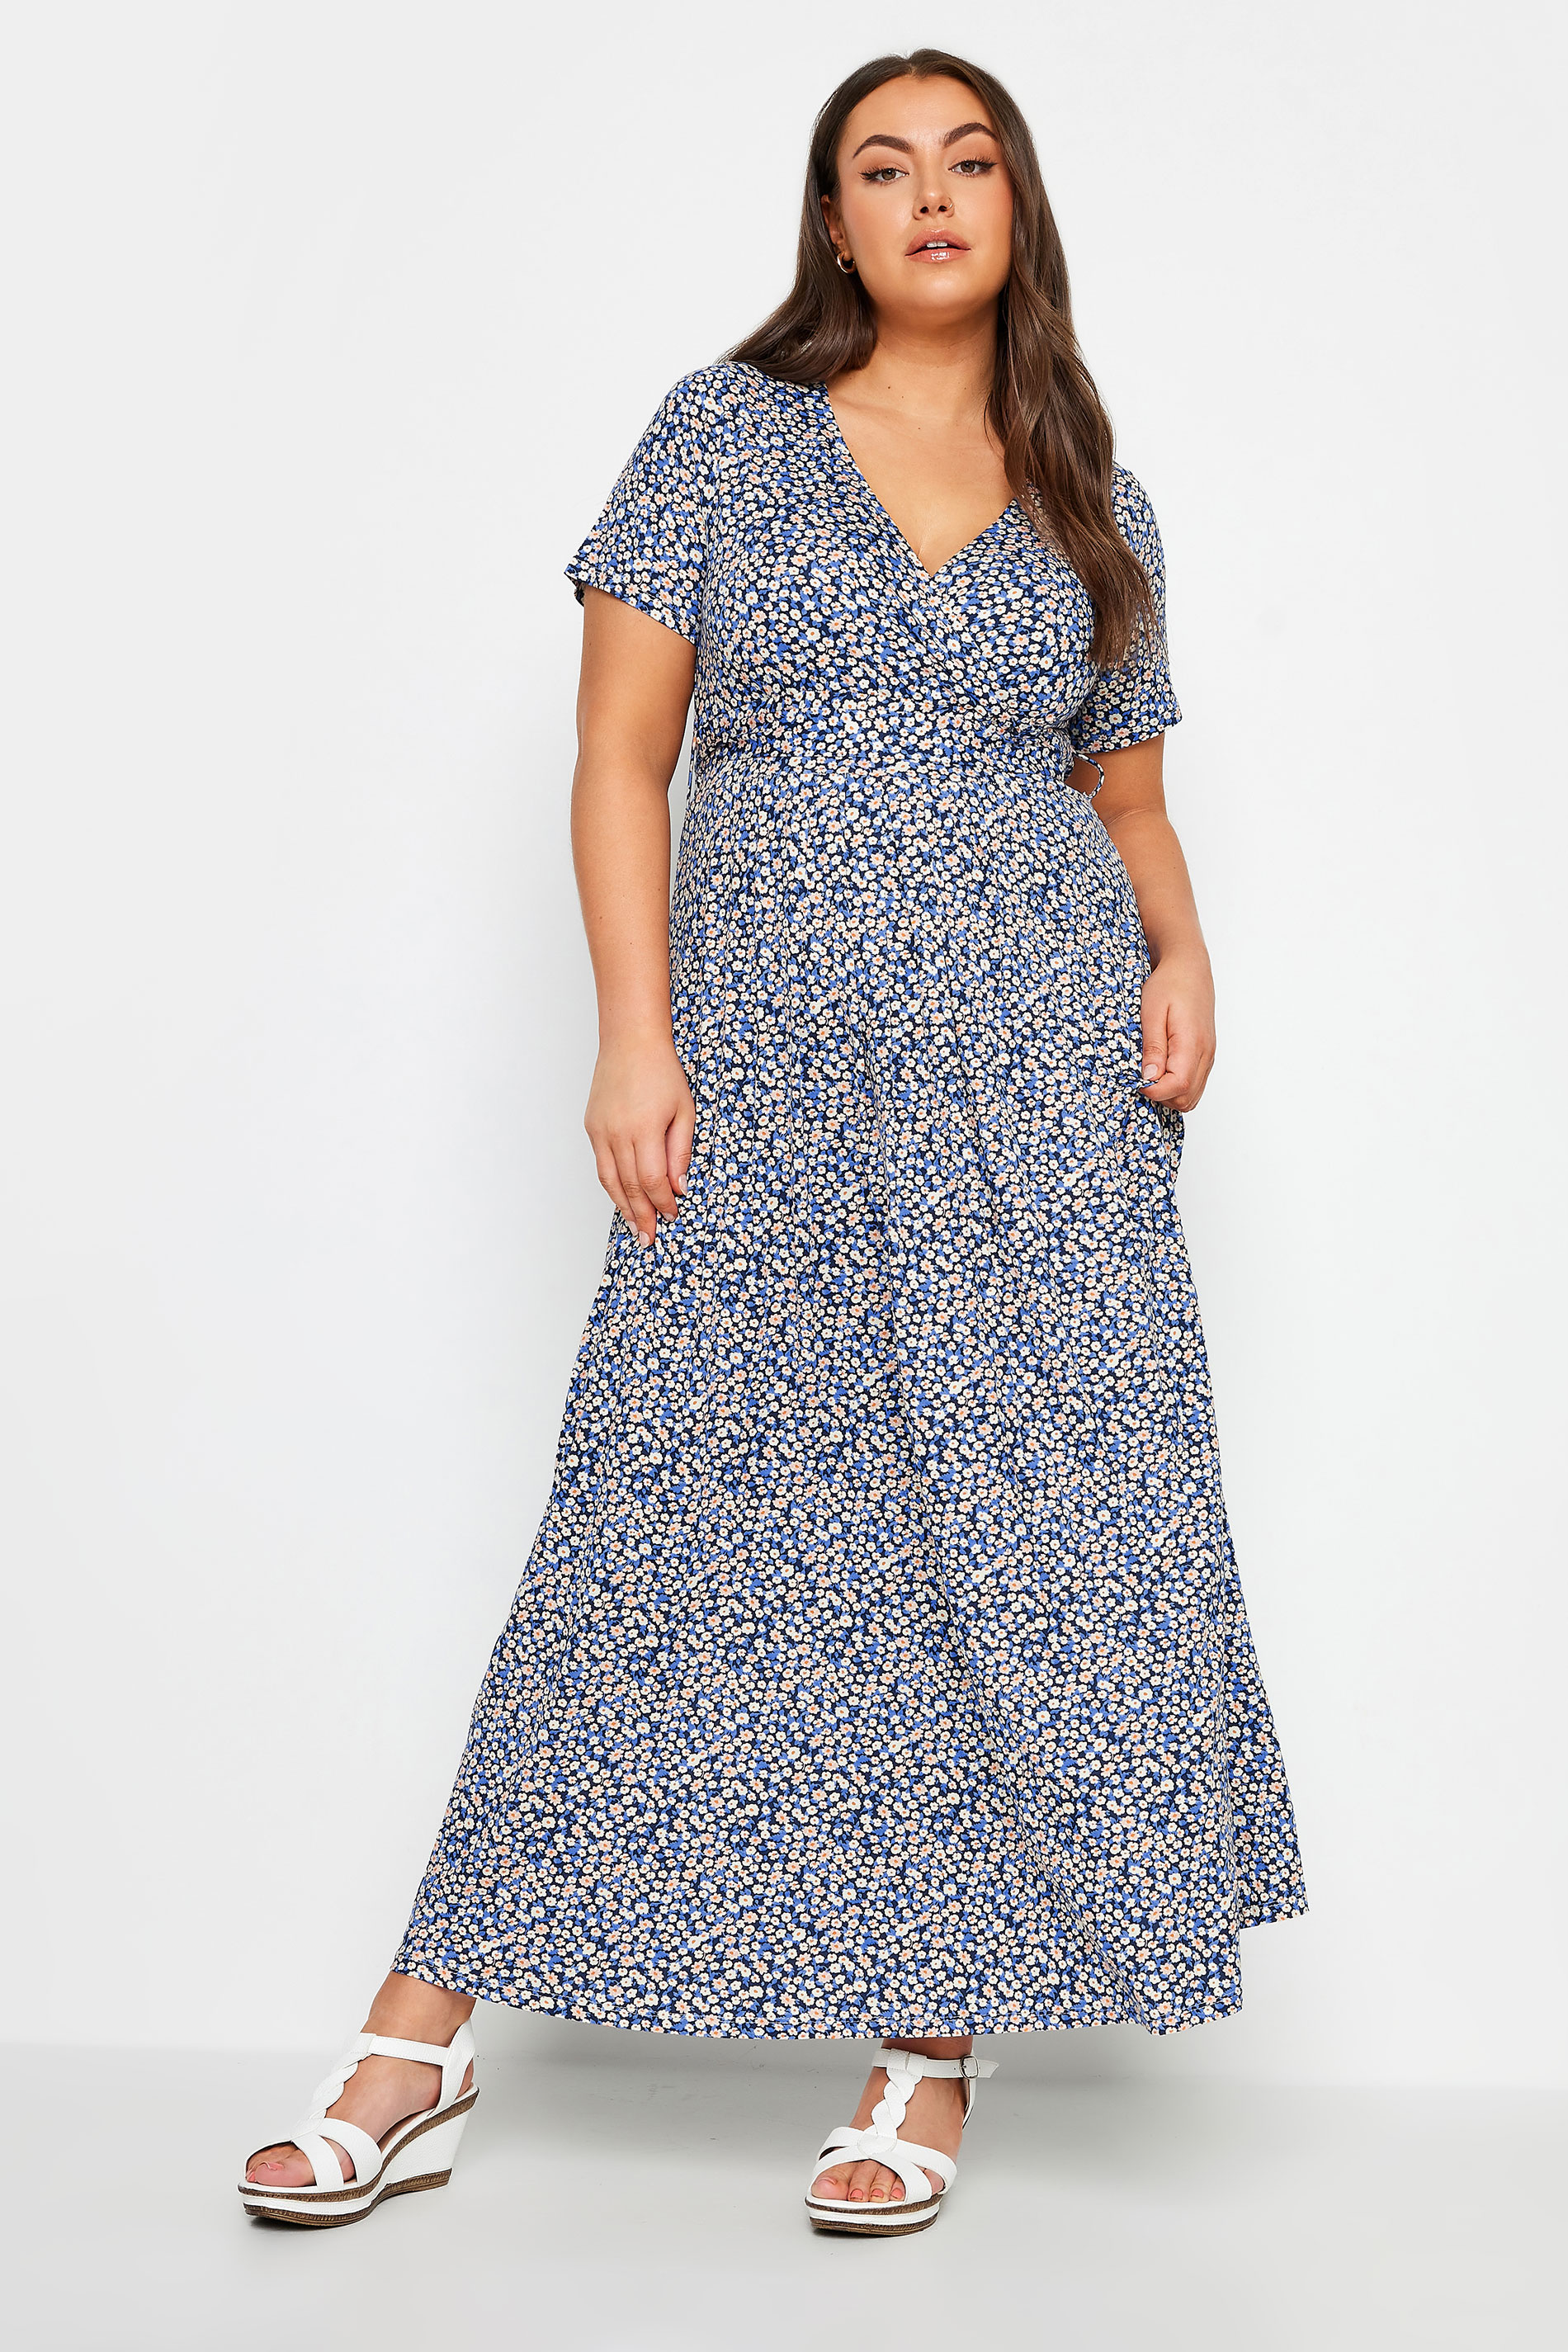 YOURS Plus Size Blue Floral Maxi Wrap Dress | Ypurs Clothing 2